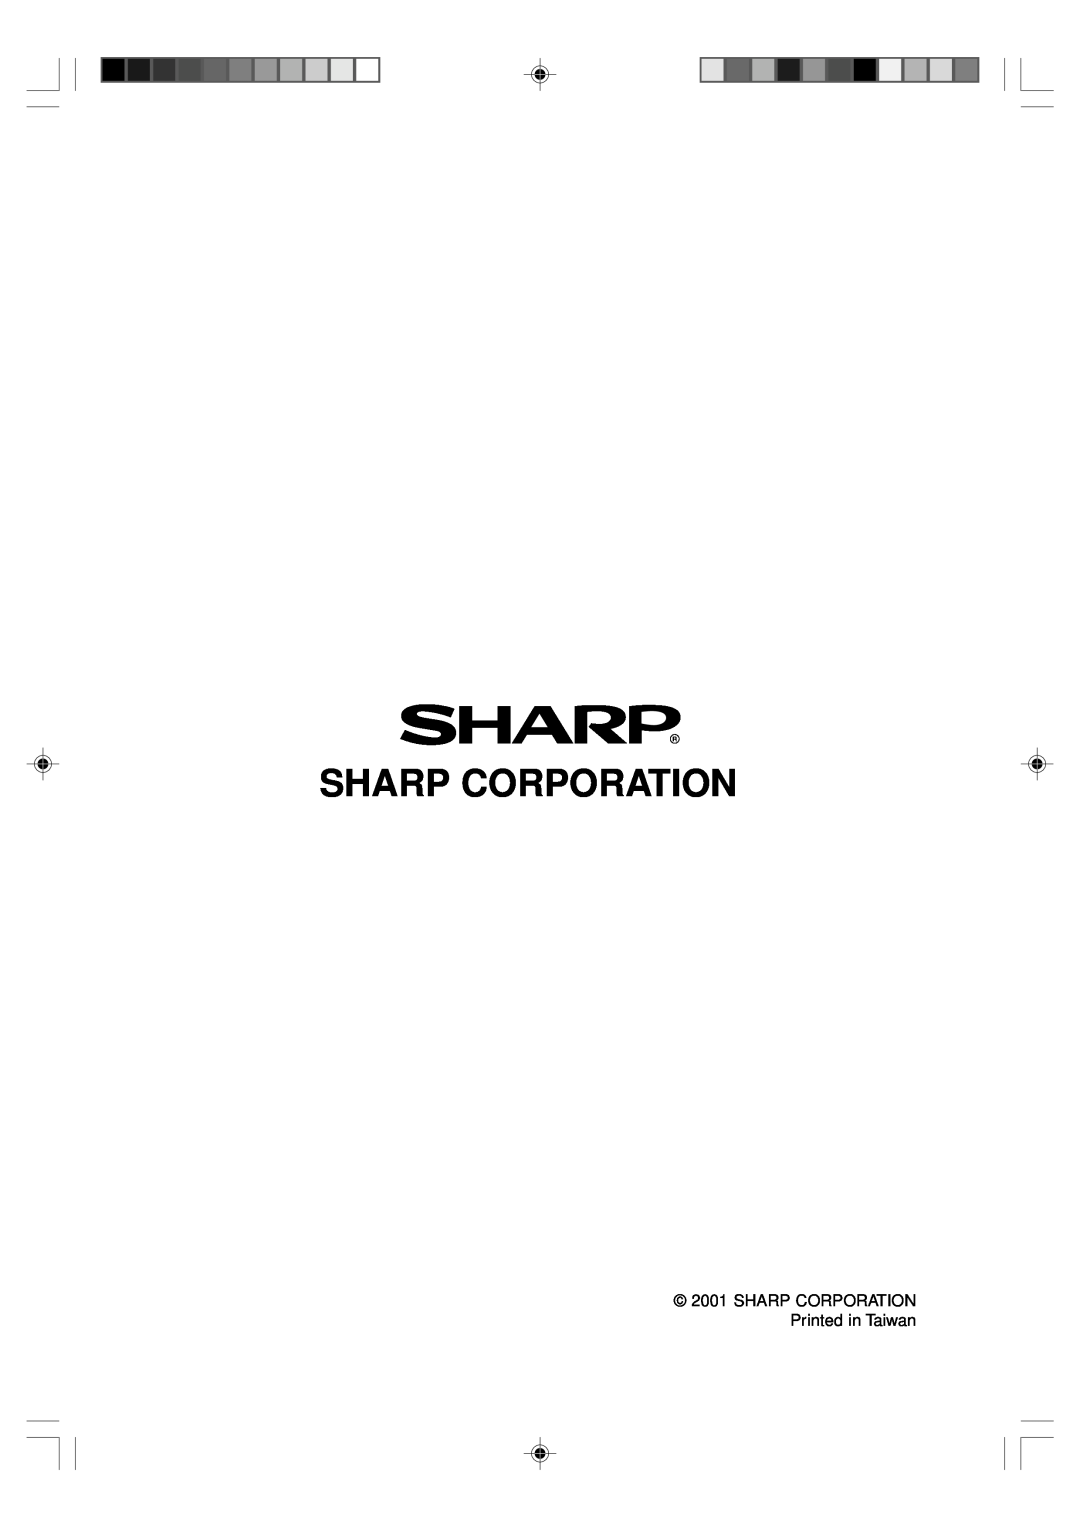 Sharp LL-T15V1 operation manual Sharp Corporation, SHARP CORPORATION Printed in Taiwan 